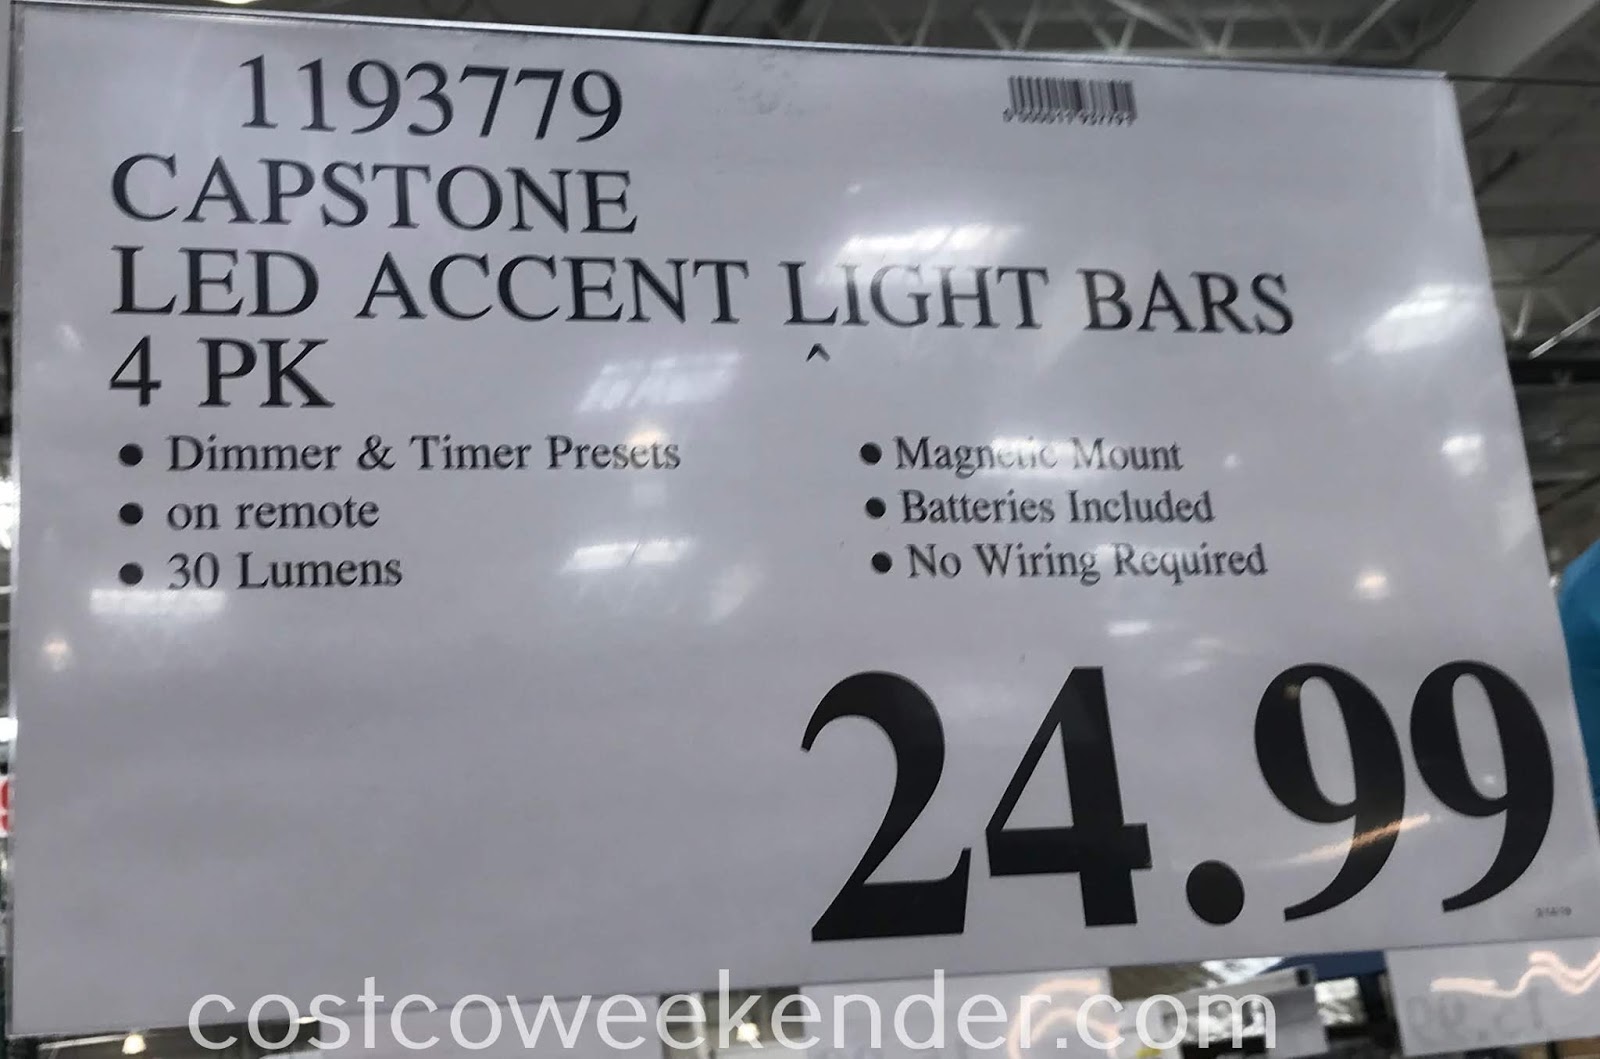 Capstone Led Accent Light Bars Set Of 4 Costco Weekender